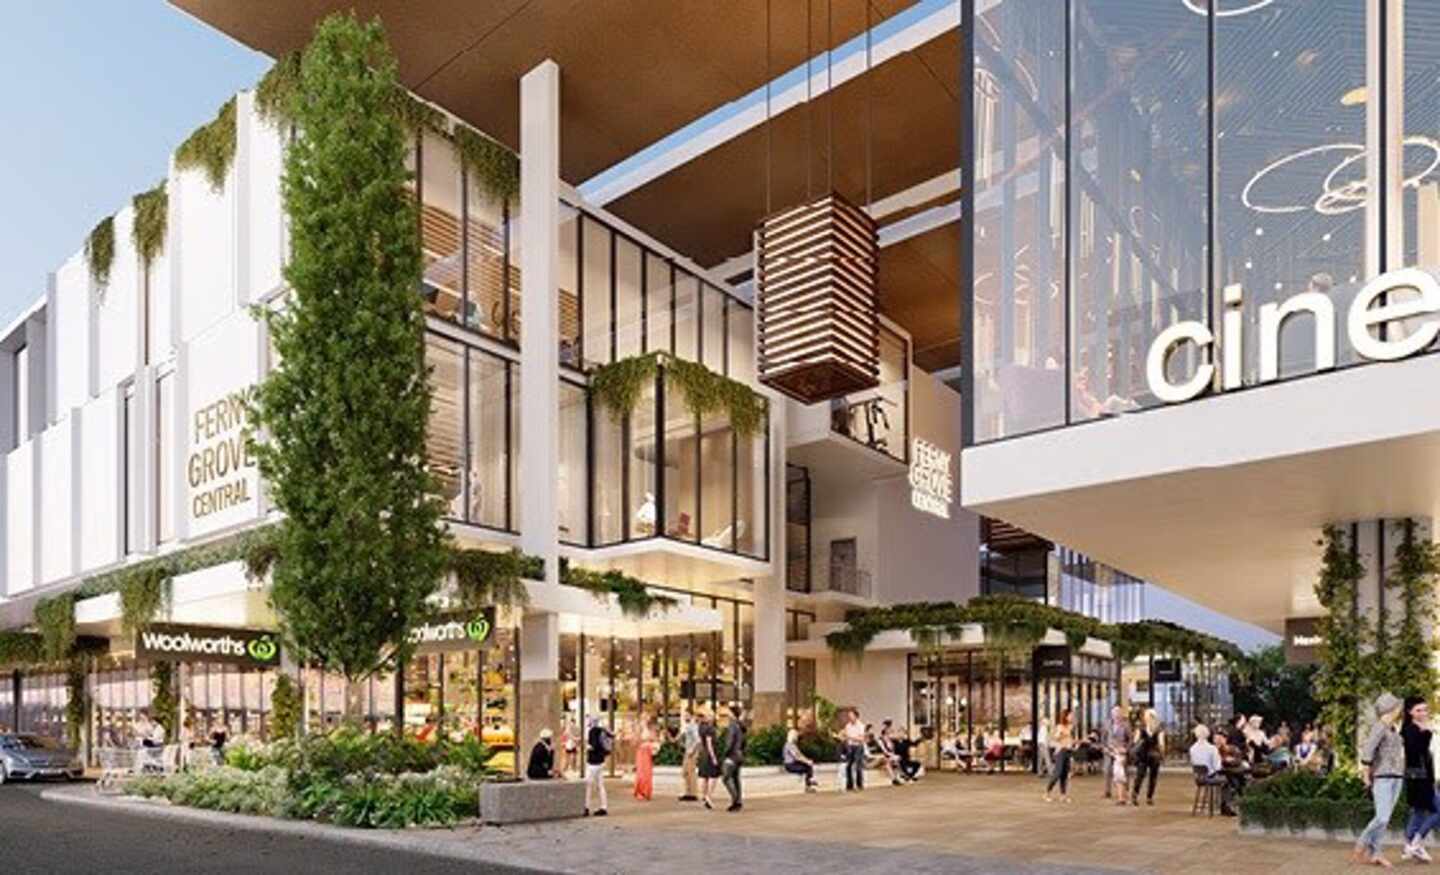 Cimic (ACS) construirá un centro residencial y ocio en Australia por 65 millones de euros